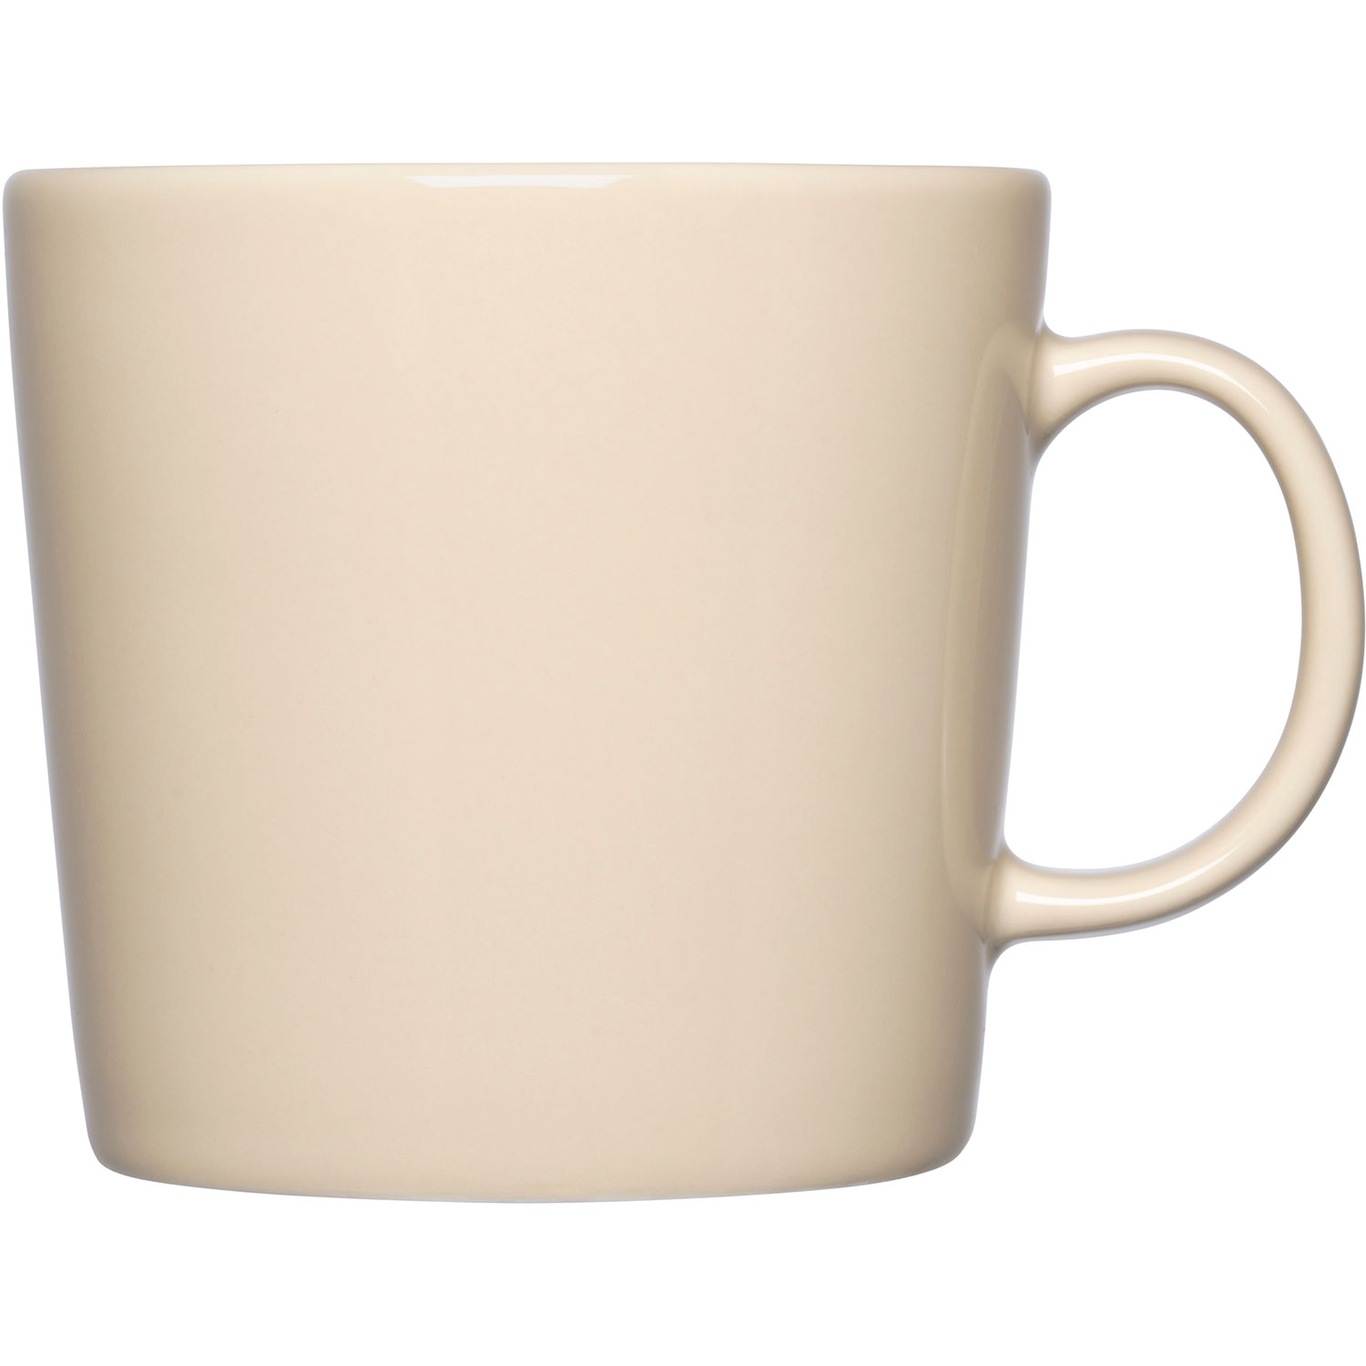 Teema mug 0.4L linen